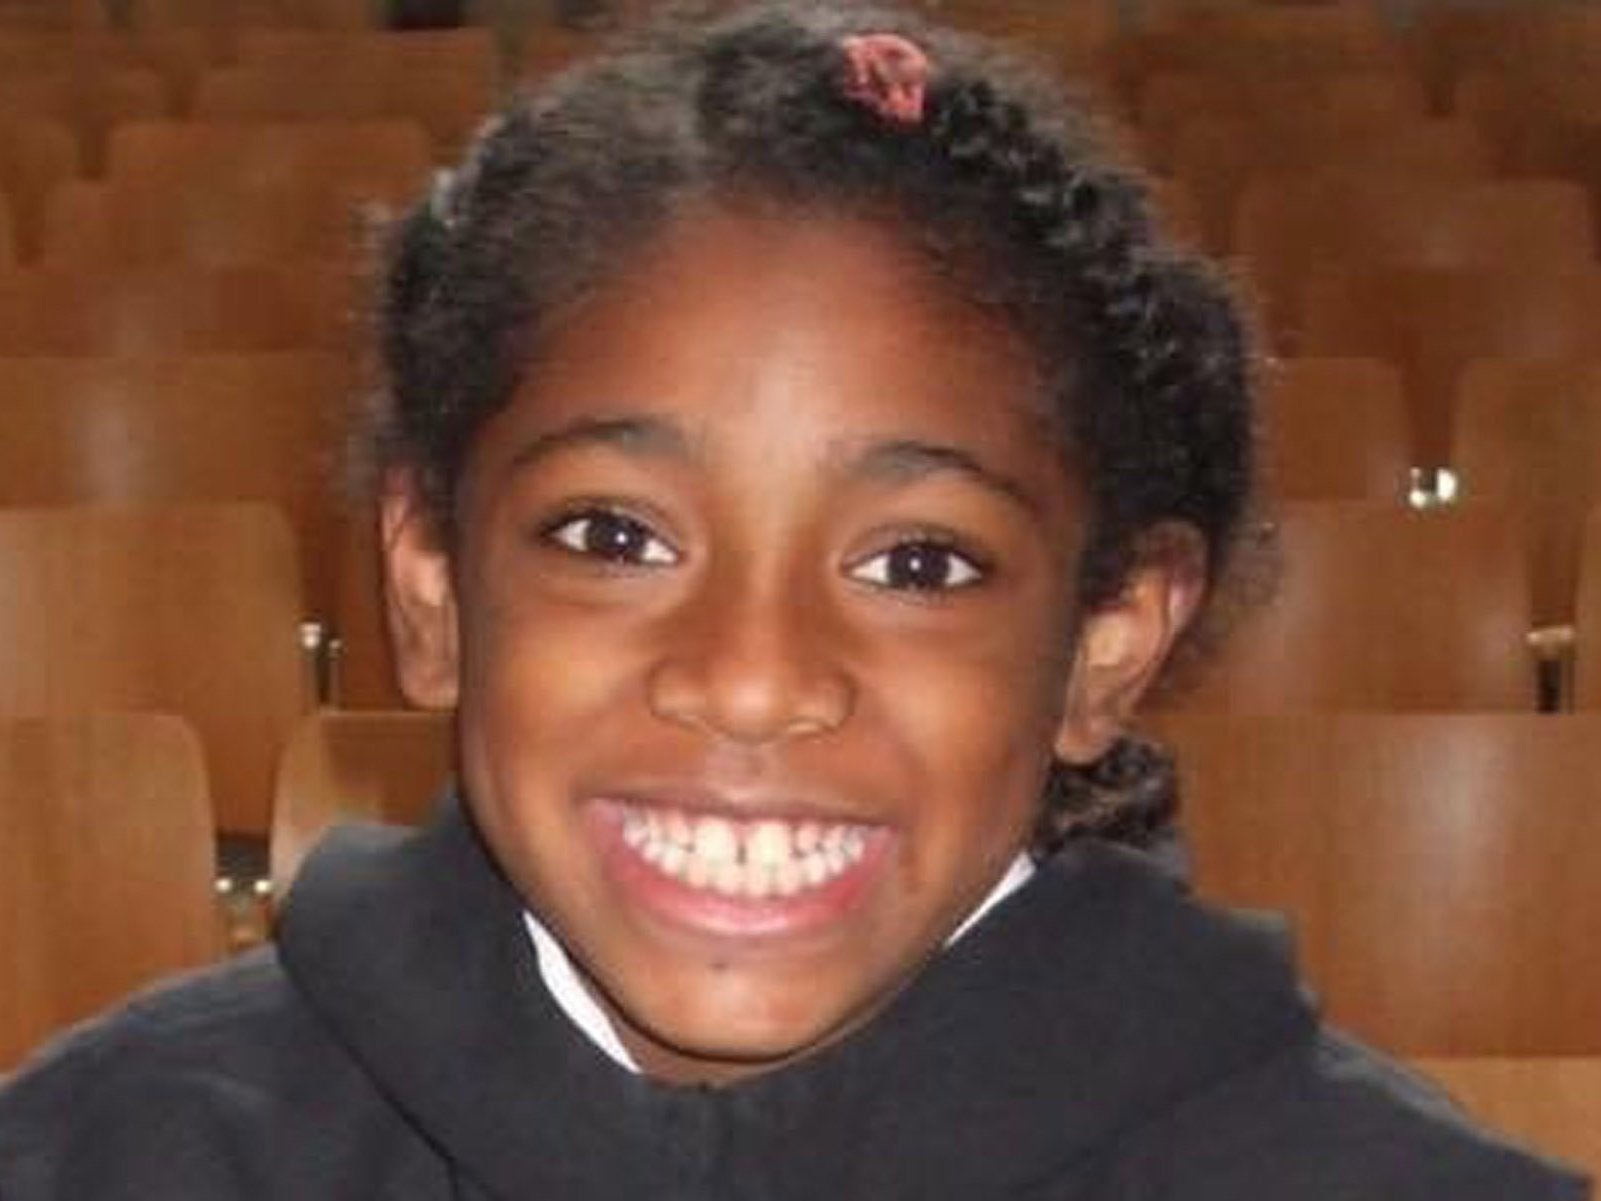 Nine-year-old Ella Kissi-Debrah suffered a fatal asthma attack in February 2013.